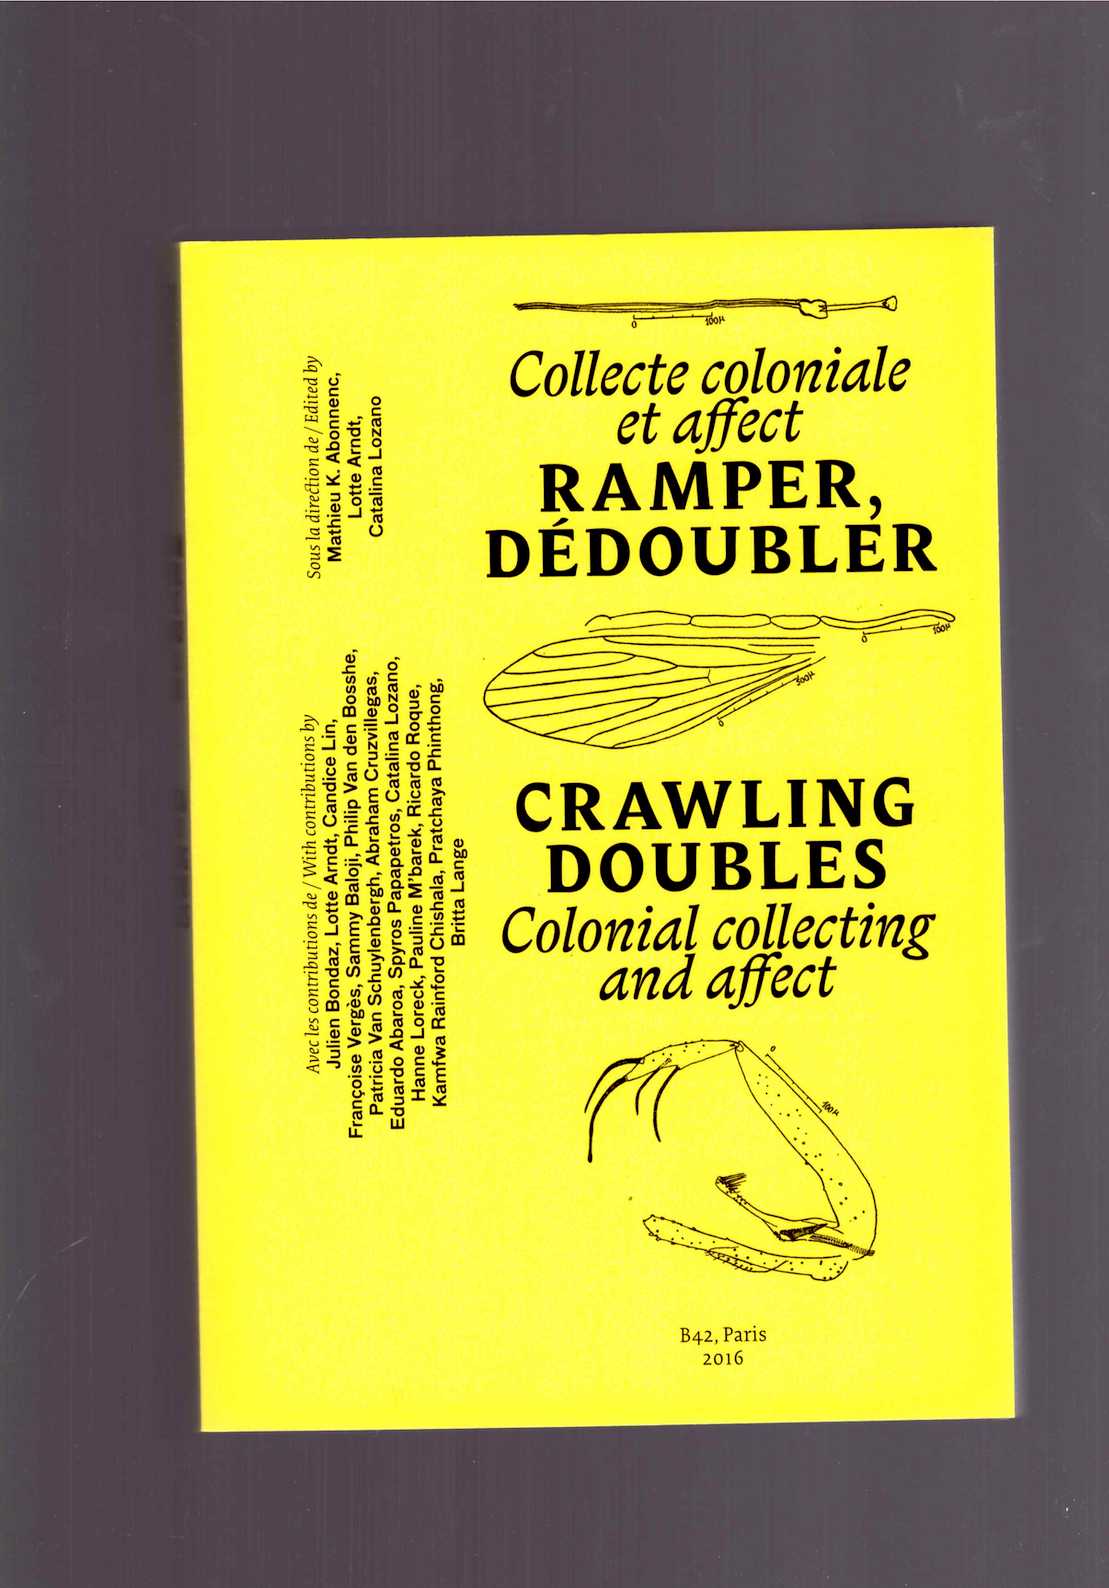 ABONNENC, Mathieu K.; ARNDT, Lotte; LOZANO, Catalina (eds.) - Ramper, Dédoubler. Collecte coloniale et affect / Crawling Doubles. Colonial collecting and affect